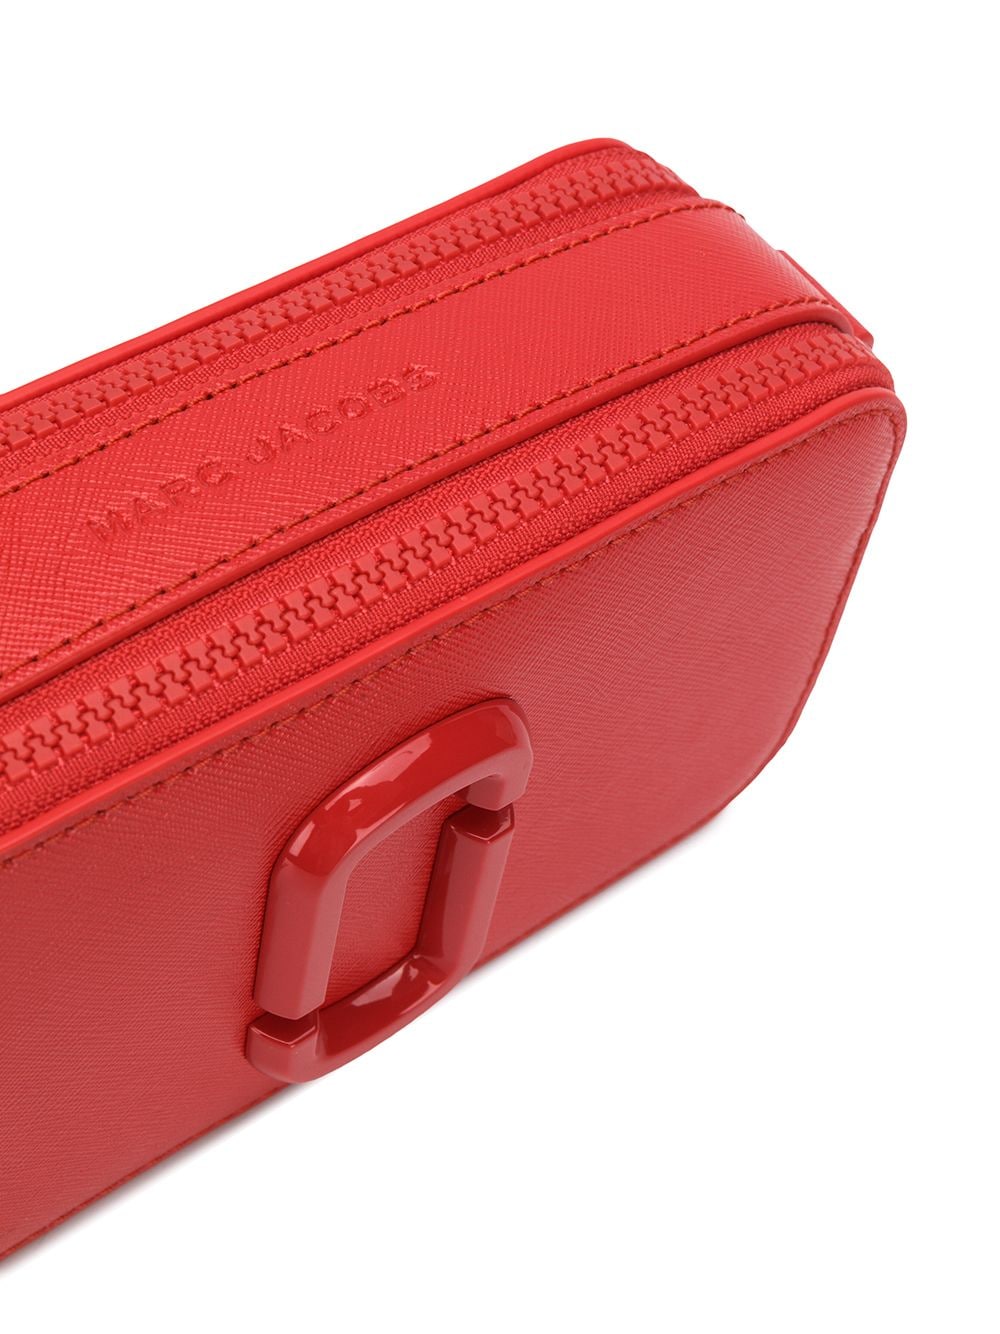 Marc Jacobs Snapshot DTM Camera Bag Poppy Red/Multi in Cowhide